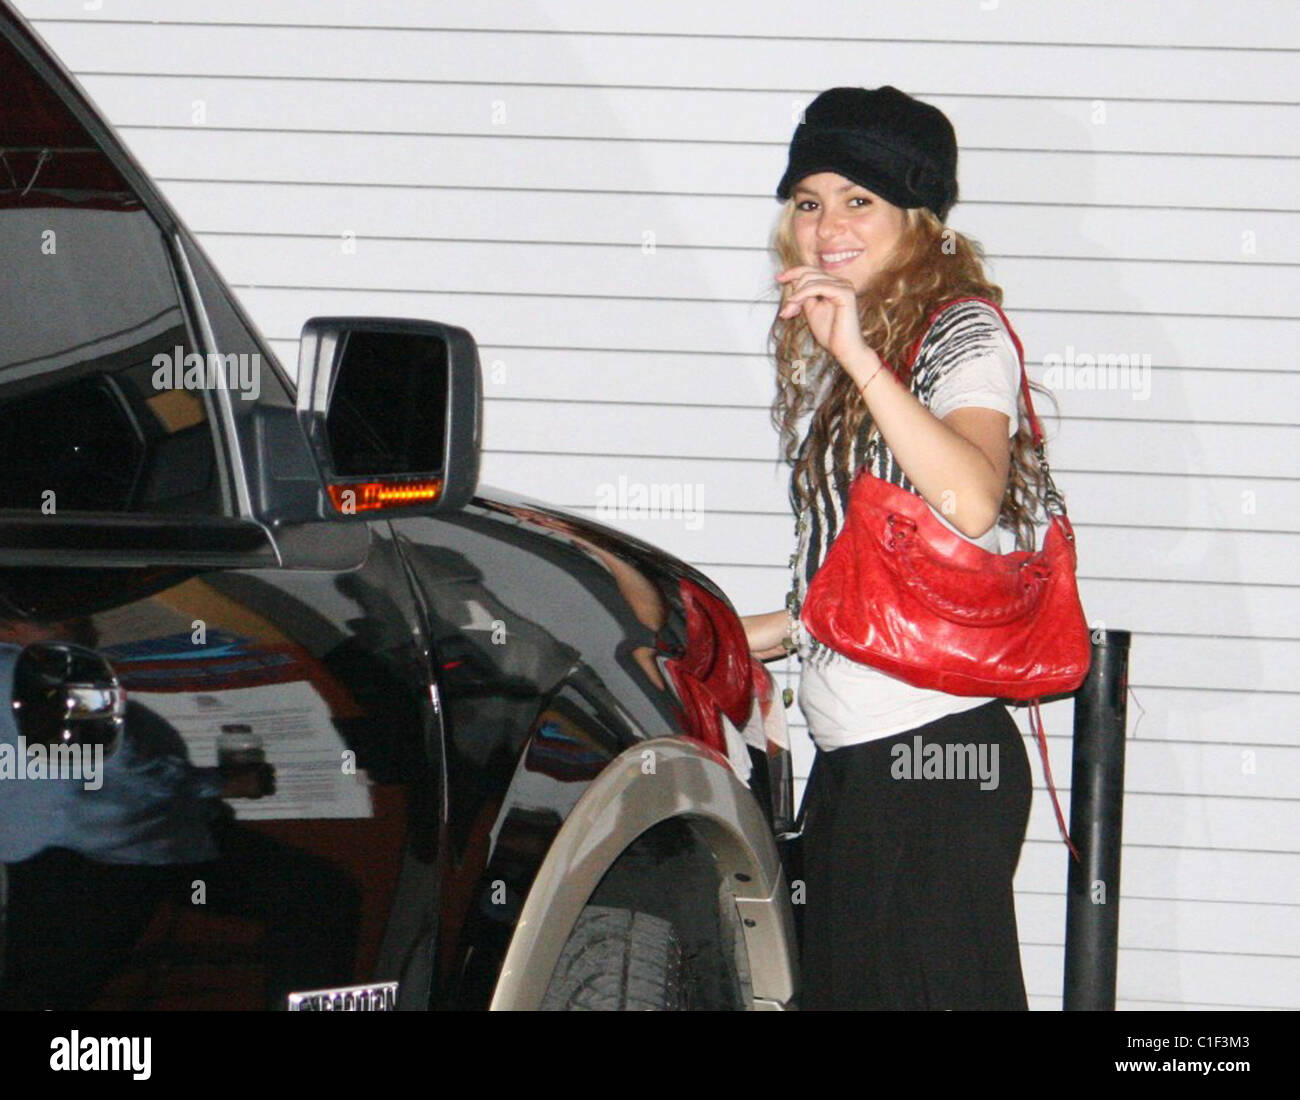 Shakira Arrives at Studar nightclub with her boyfriend San Juan, Puerto Rico - 02.05.09 Stock Photo